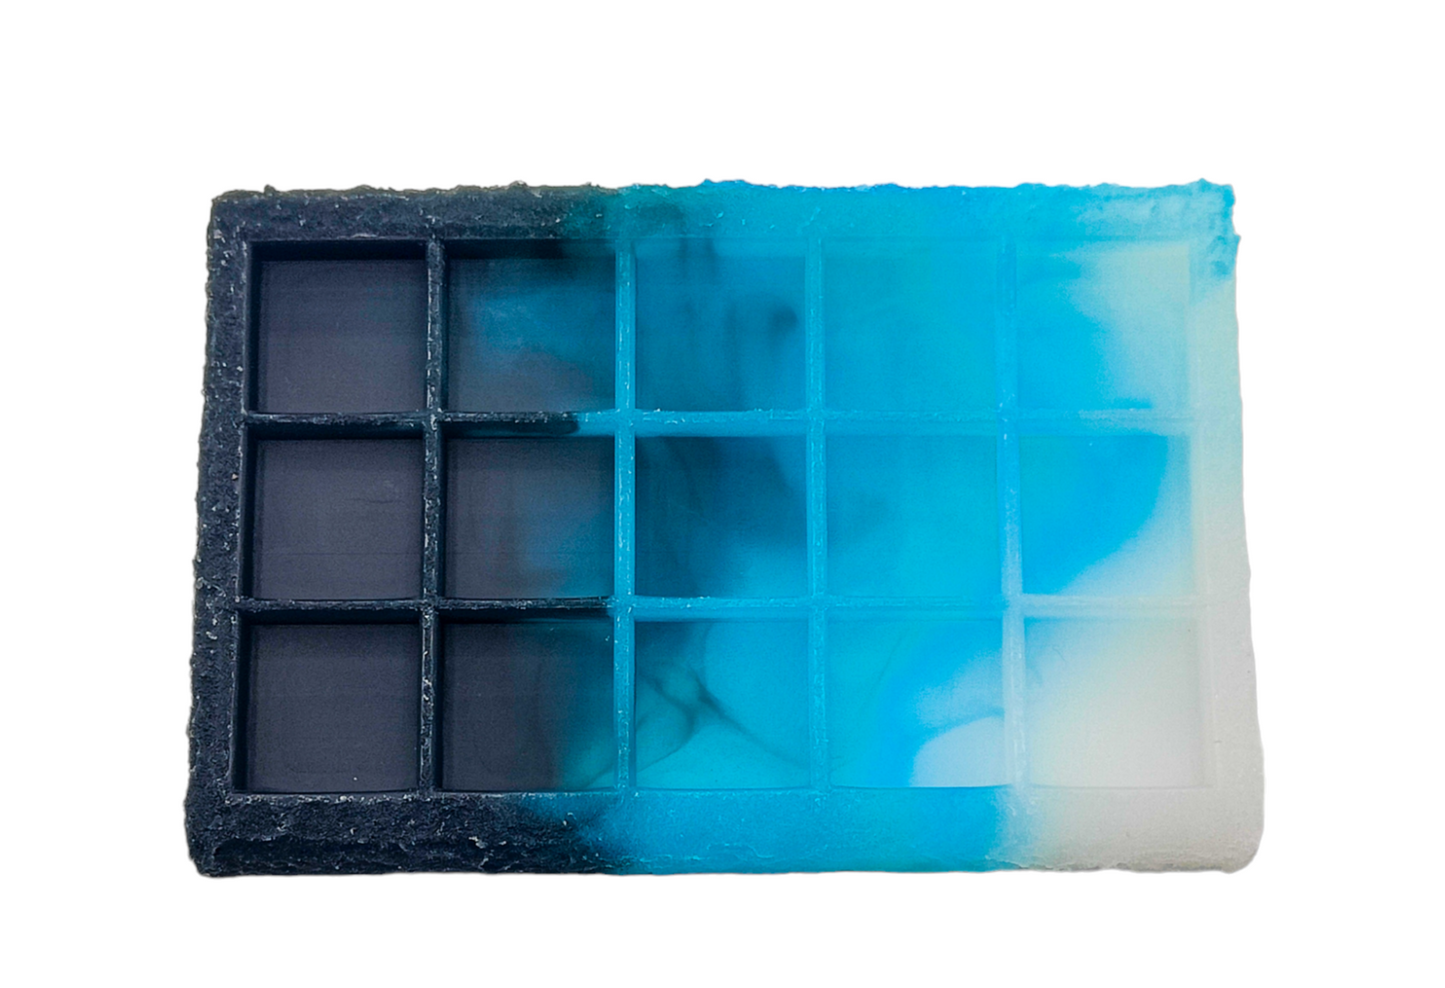 Artisan Keycap Tray - Black Ice Rock